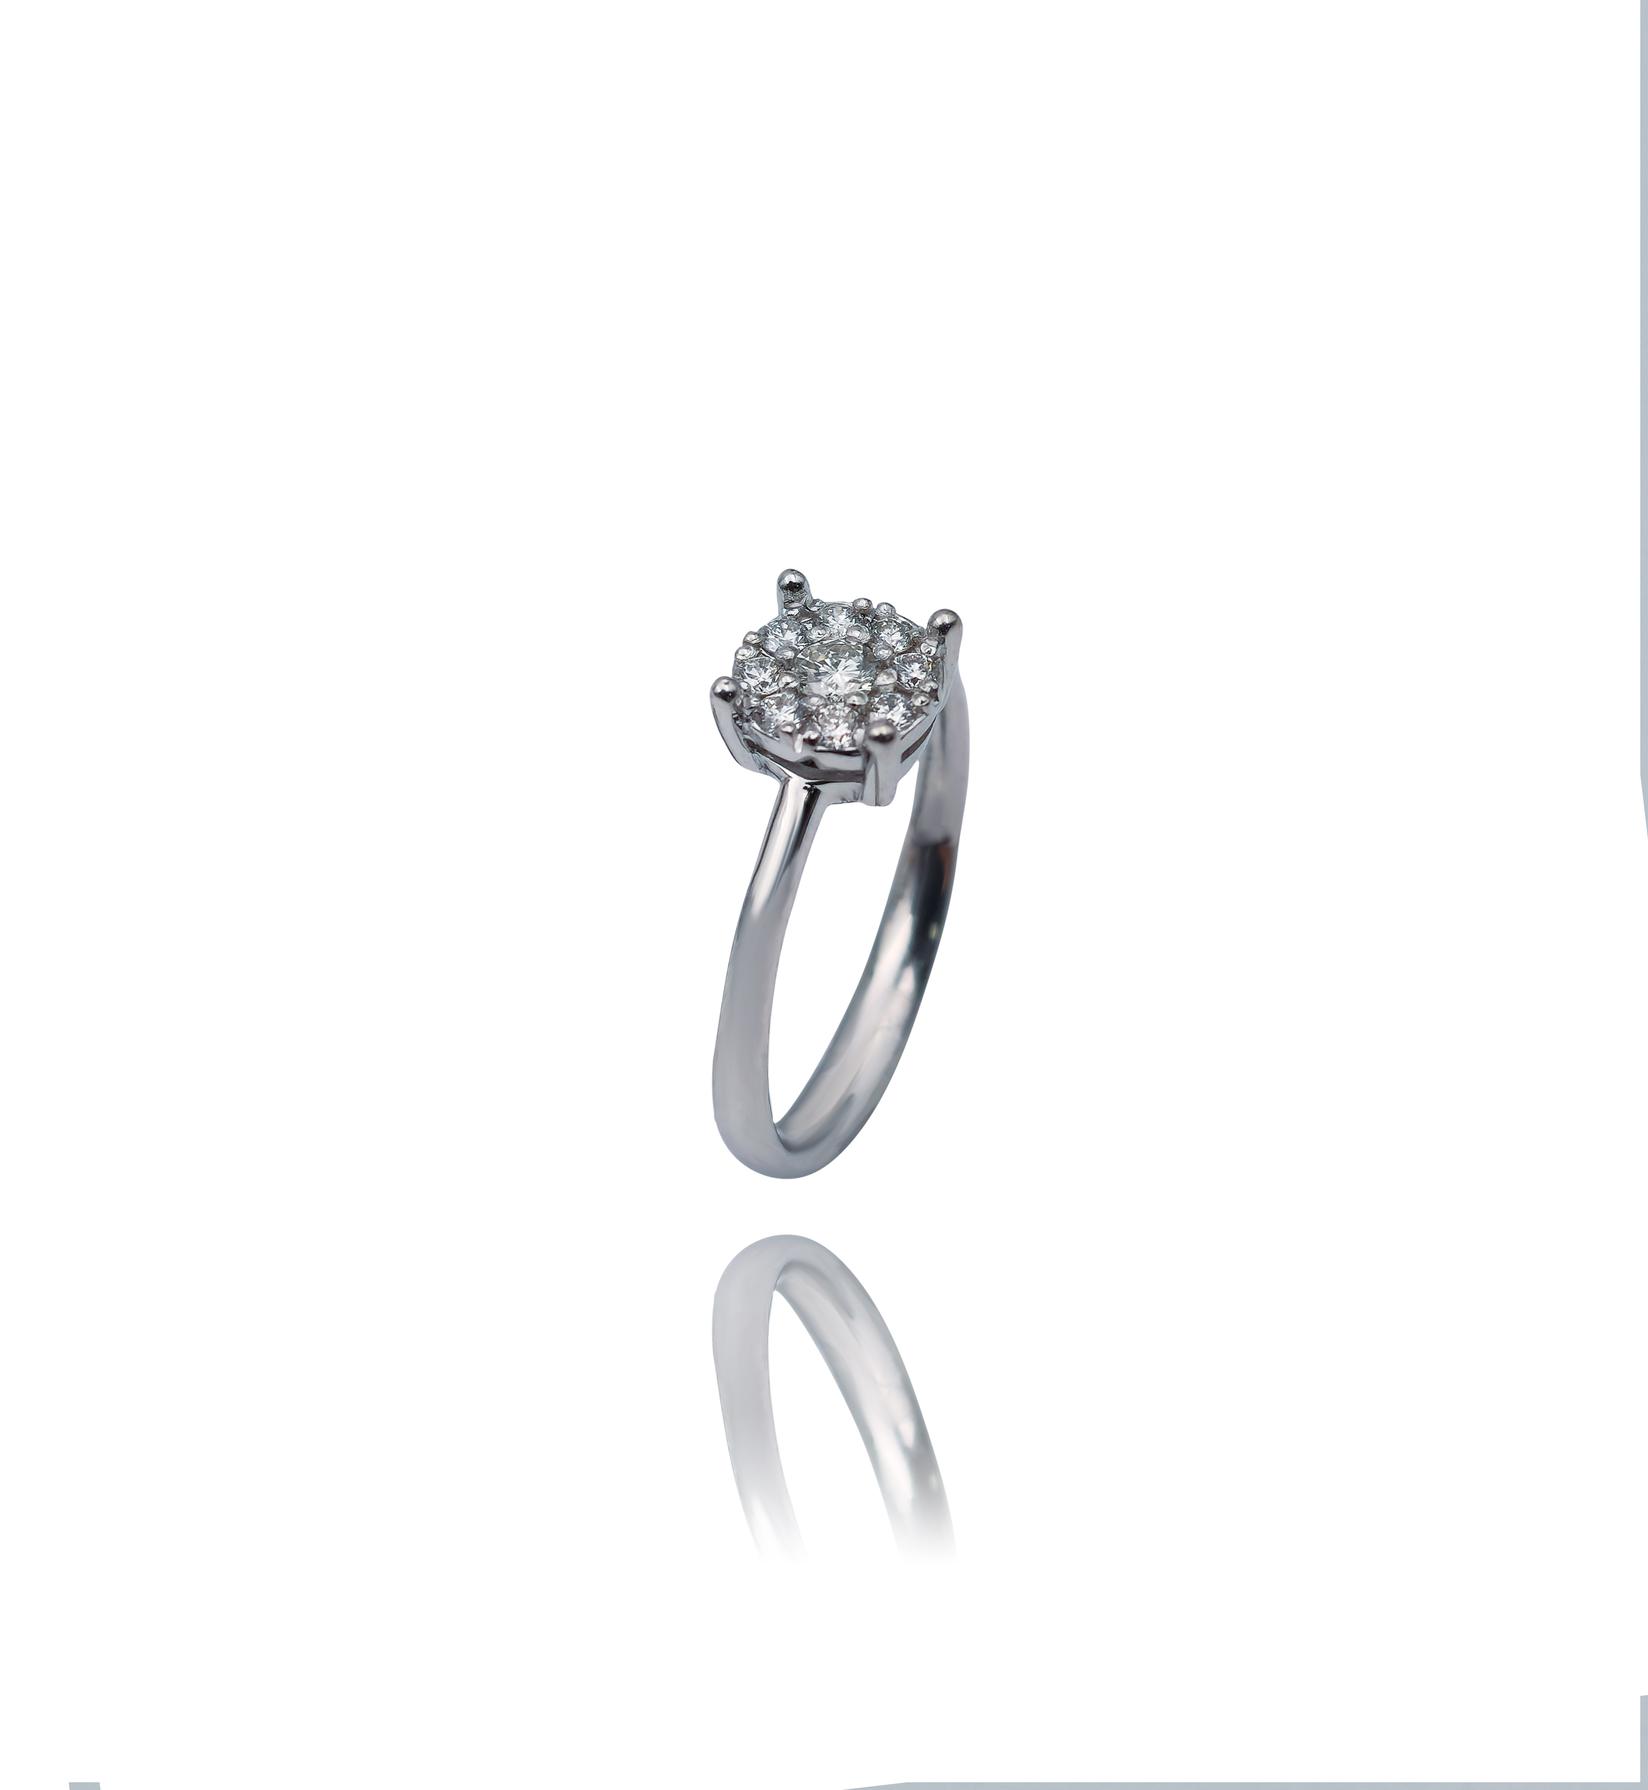 Selected image for Ženski prsten od Belog zlata sa Brilijantima, 585, 12mm